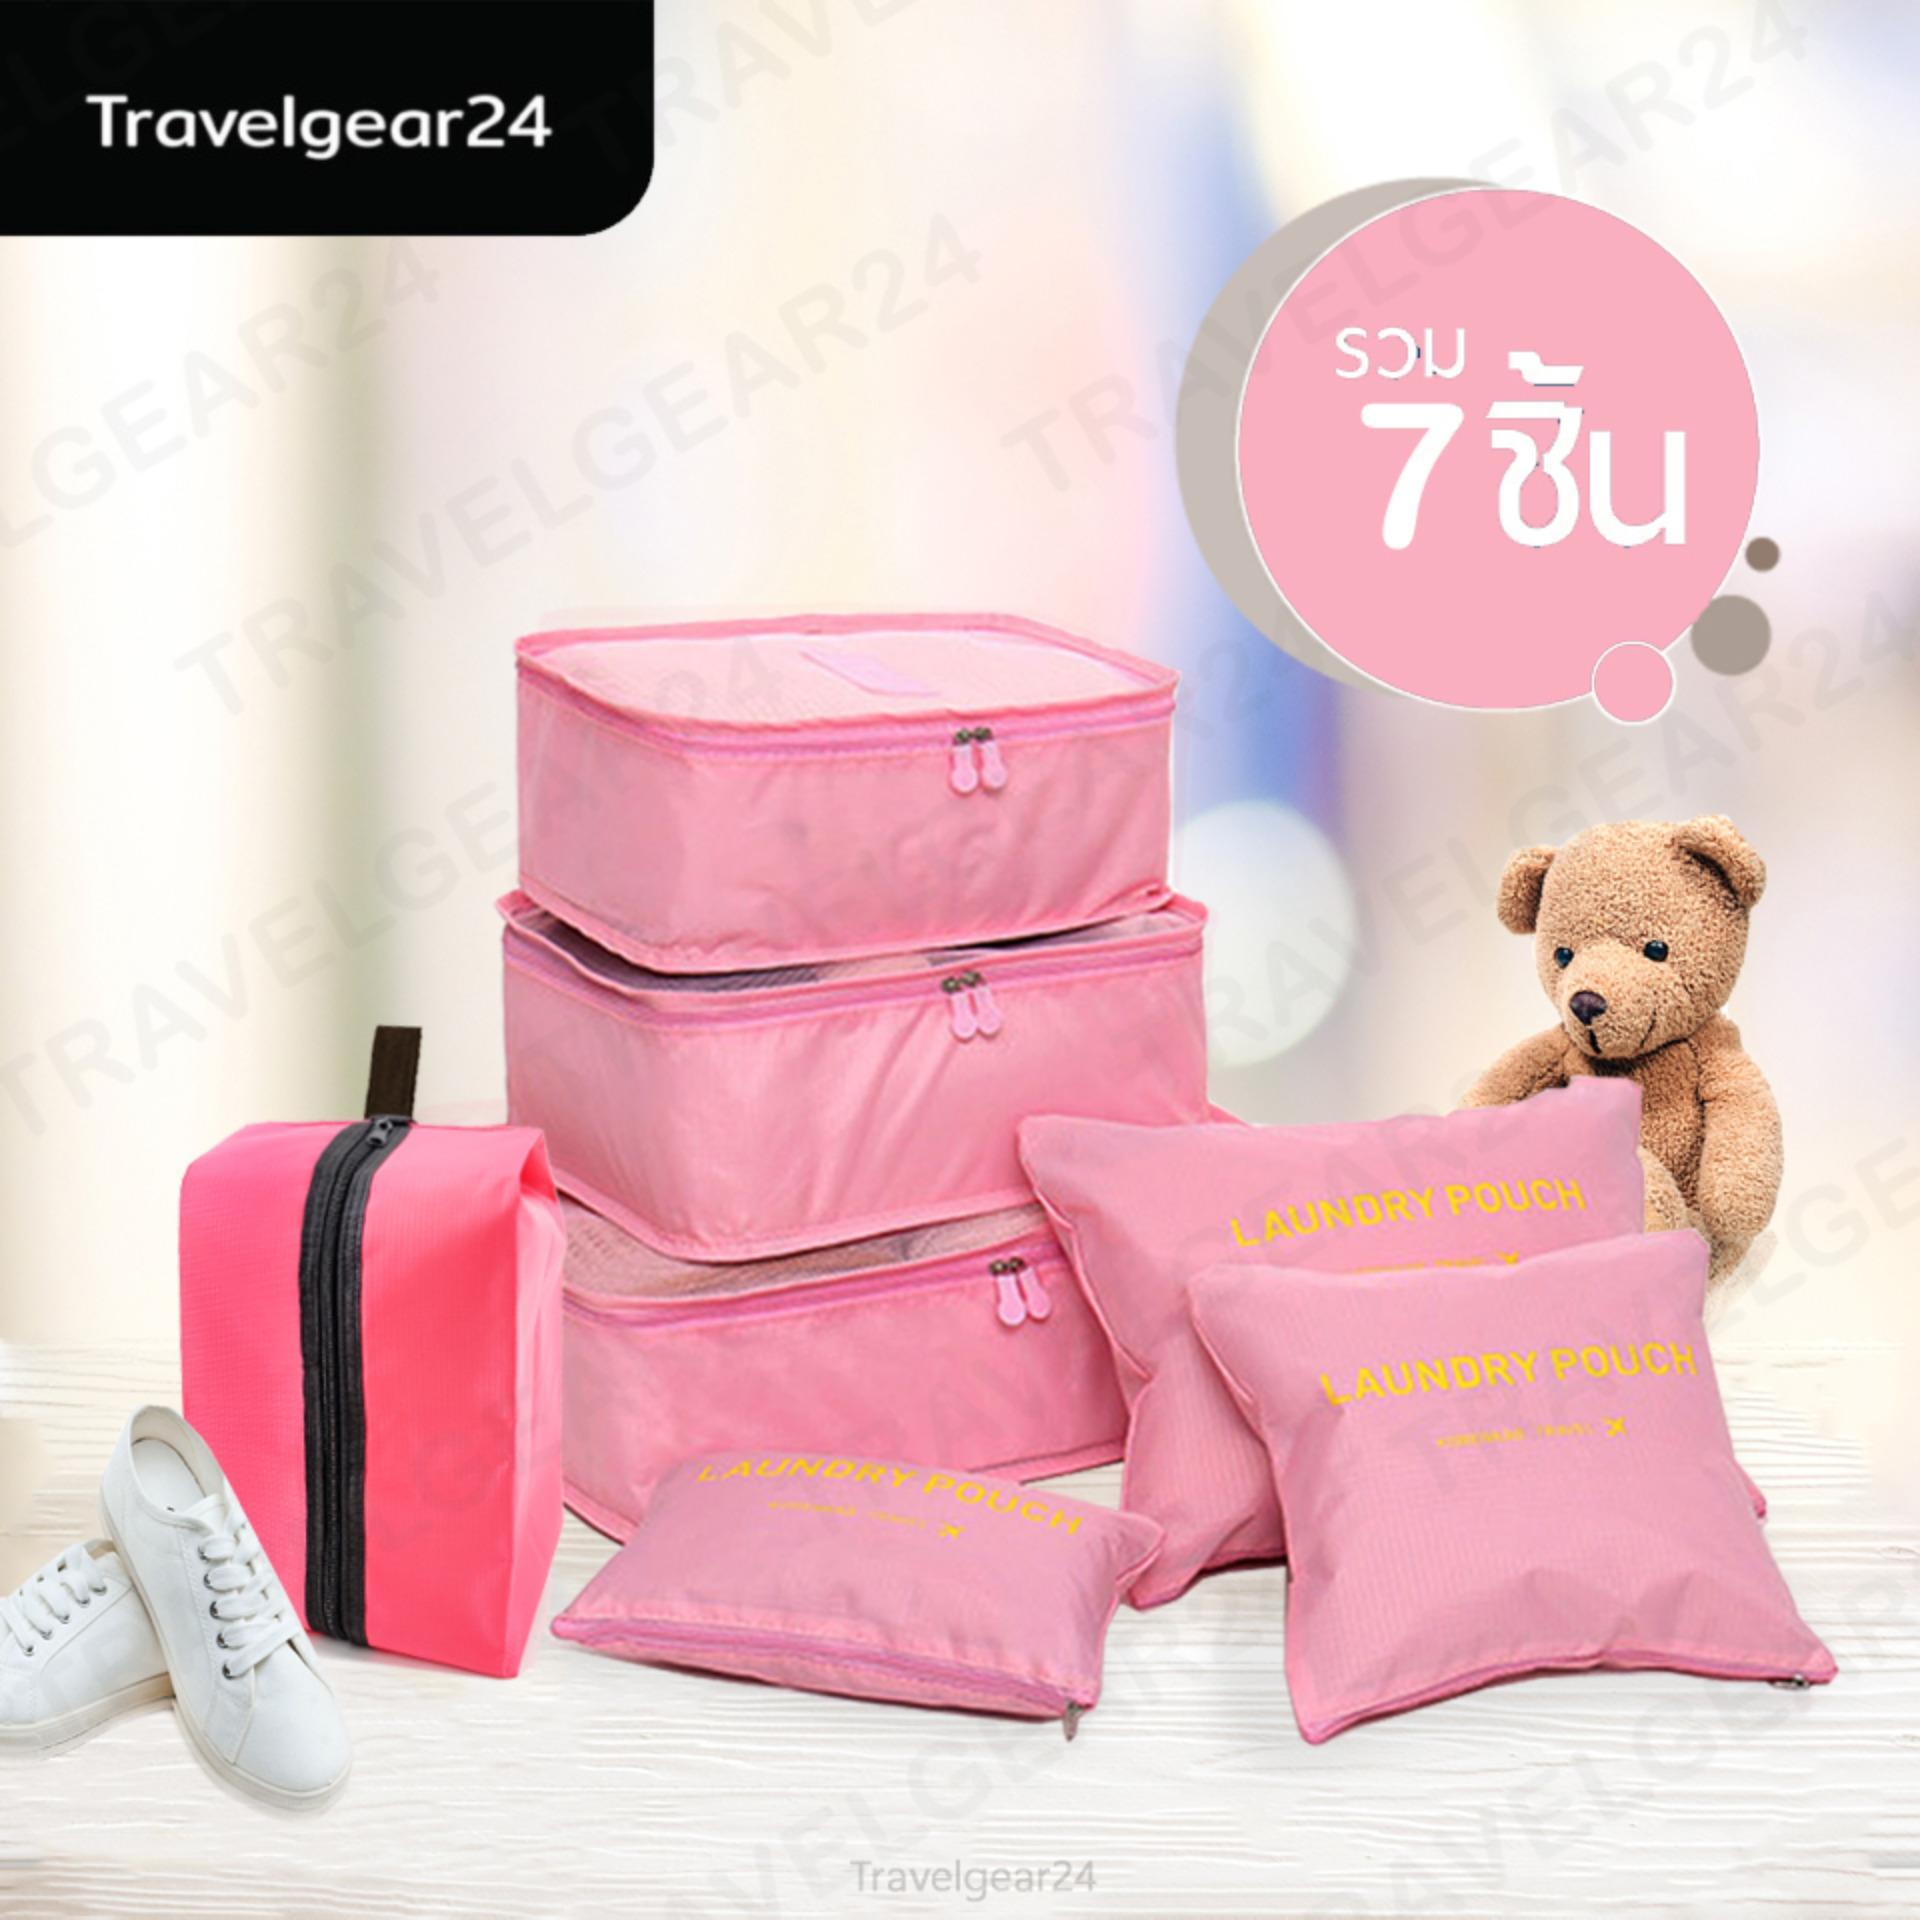 TravelGear24 กระเป๋าจัดระเบียบ เสื้อผ้า สำหรับเดินทาง เซ็ท 6 ชิ้น คู่ กระเป๋ารองเท้า Organizing Travel Bag Set 6 PCS and Shoes Bag - A0132 / A0050